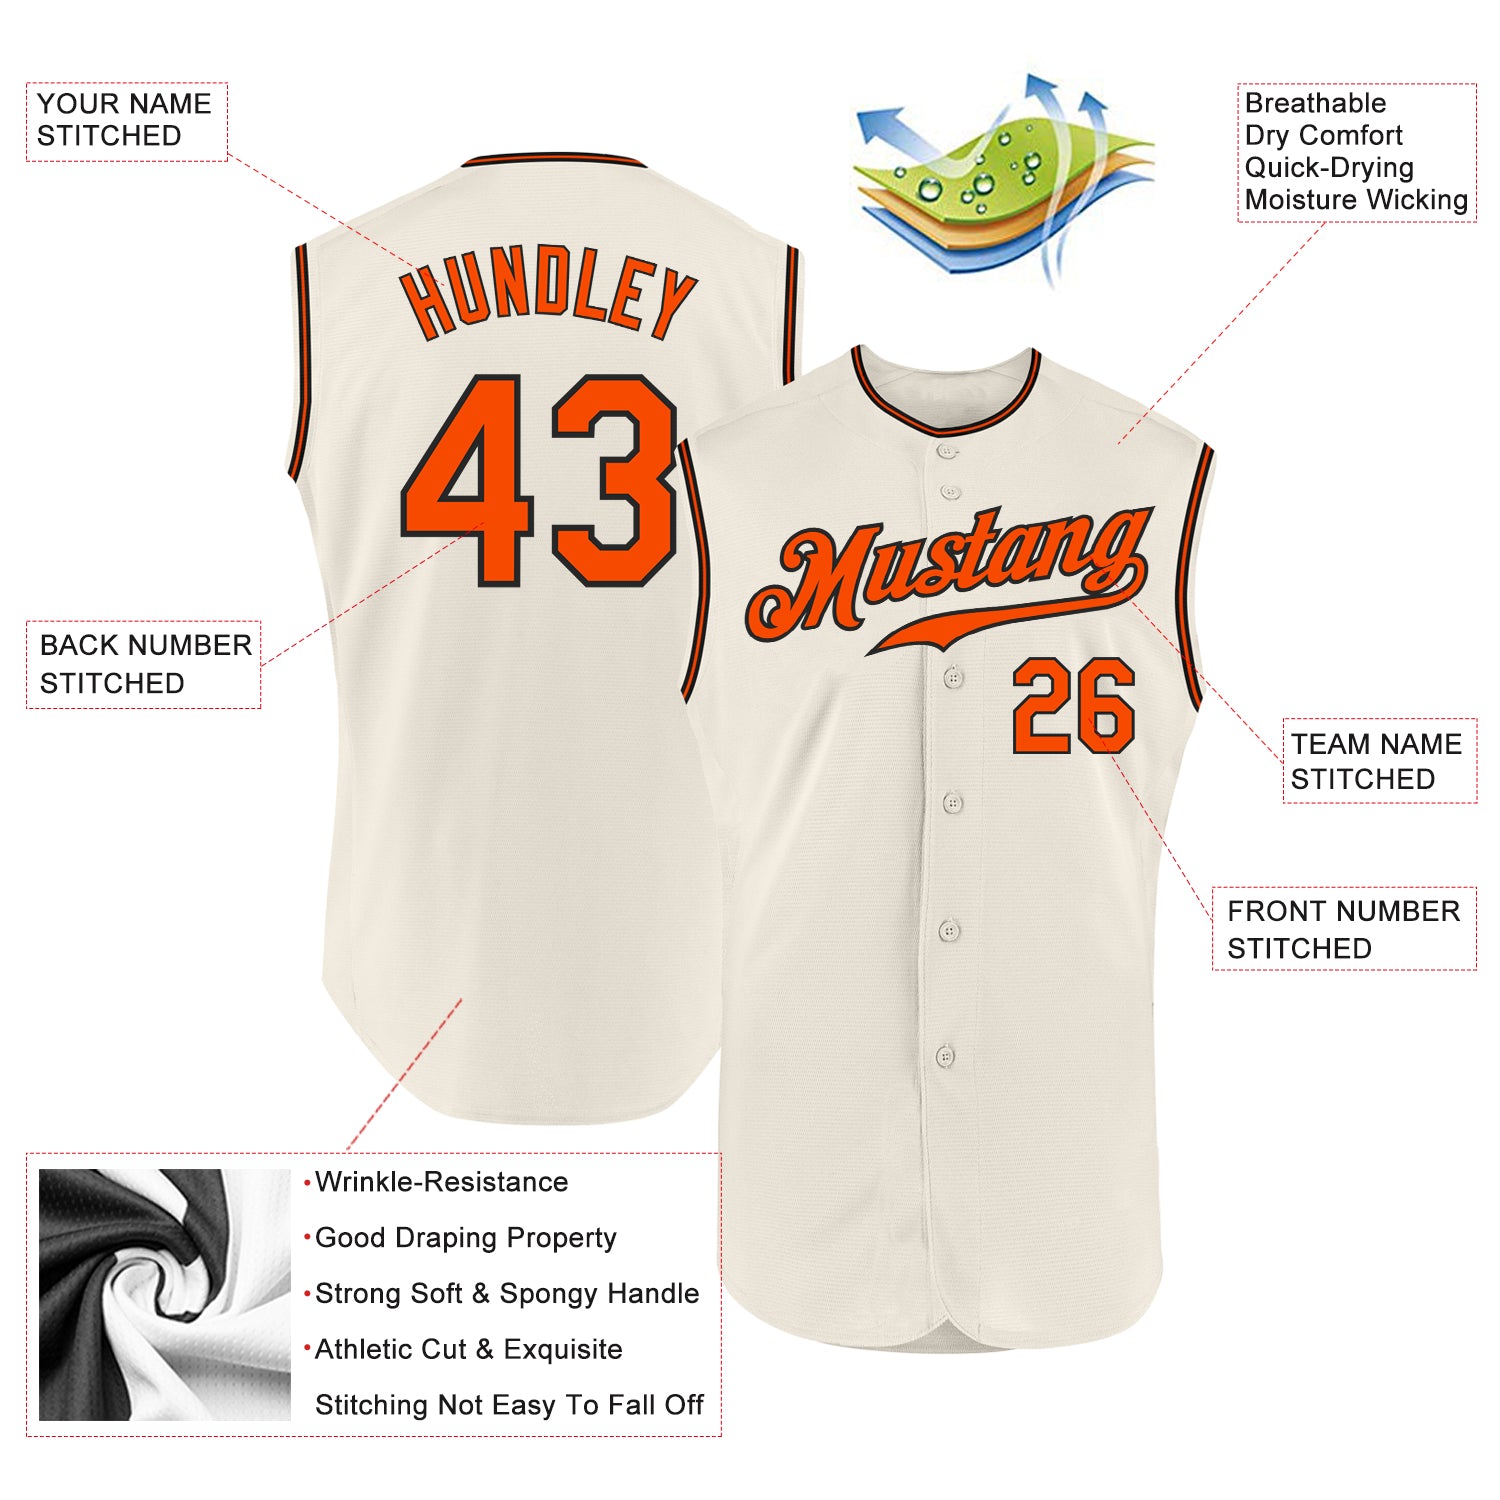 Custom Cream Orange-Black Authentic Sleeveless Baseball Jersey